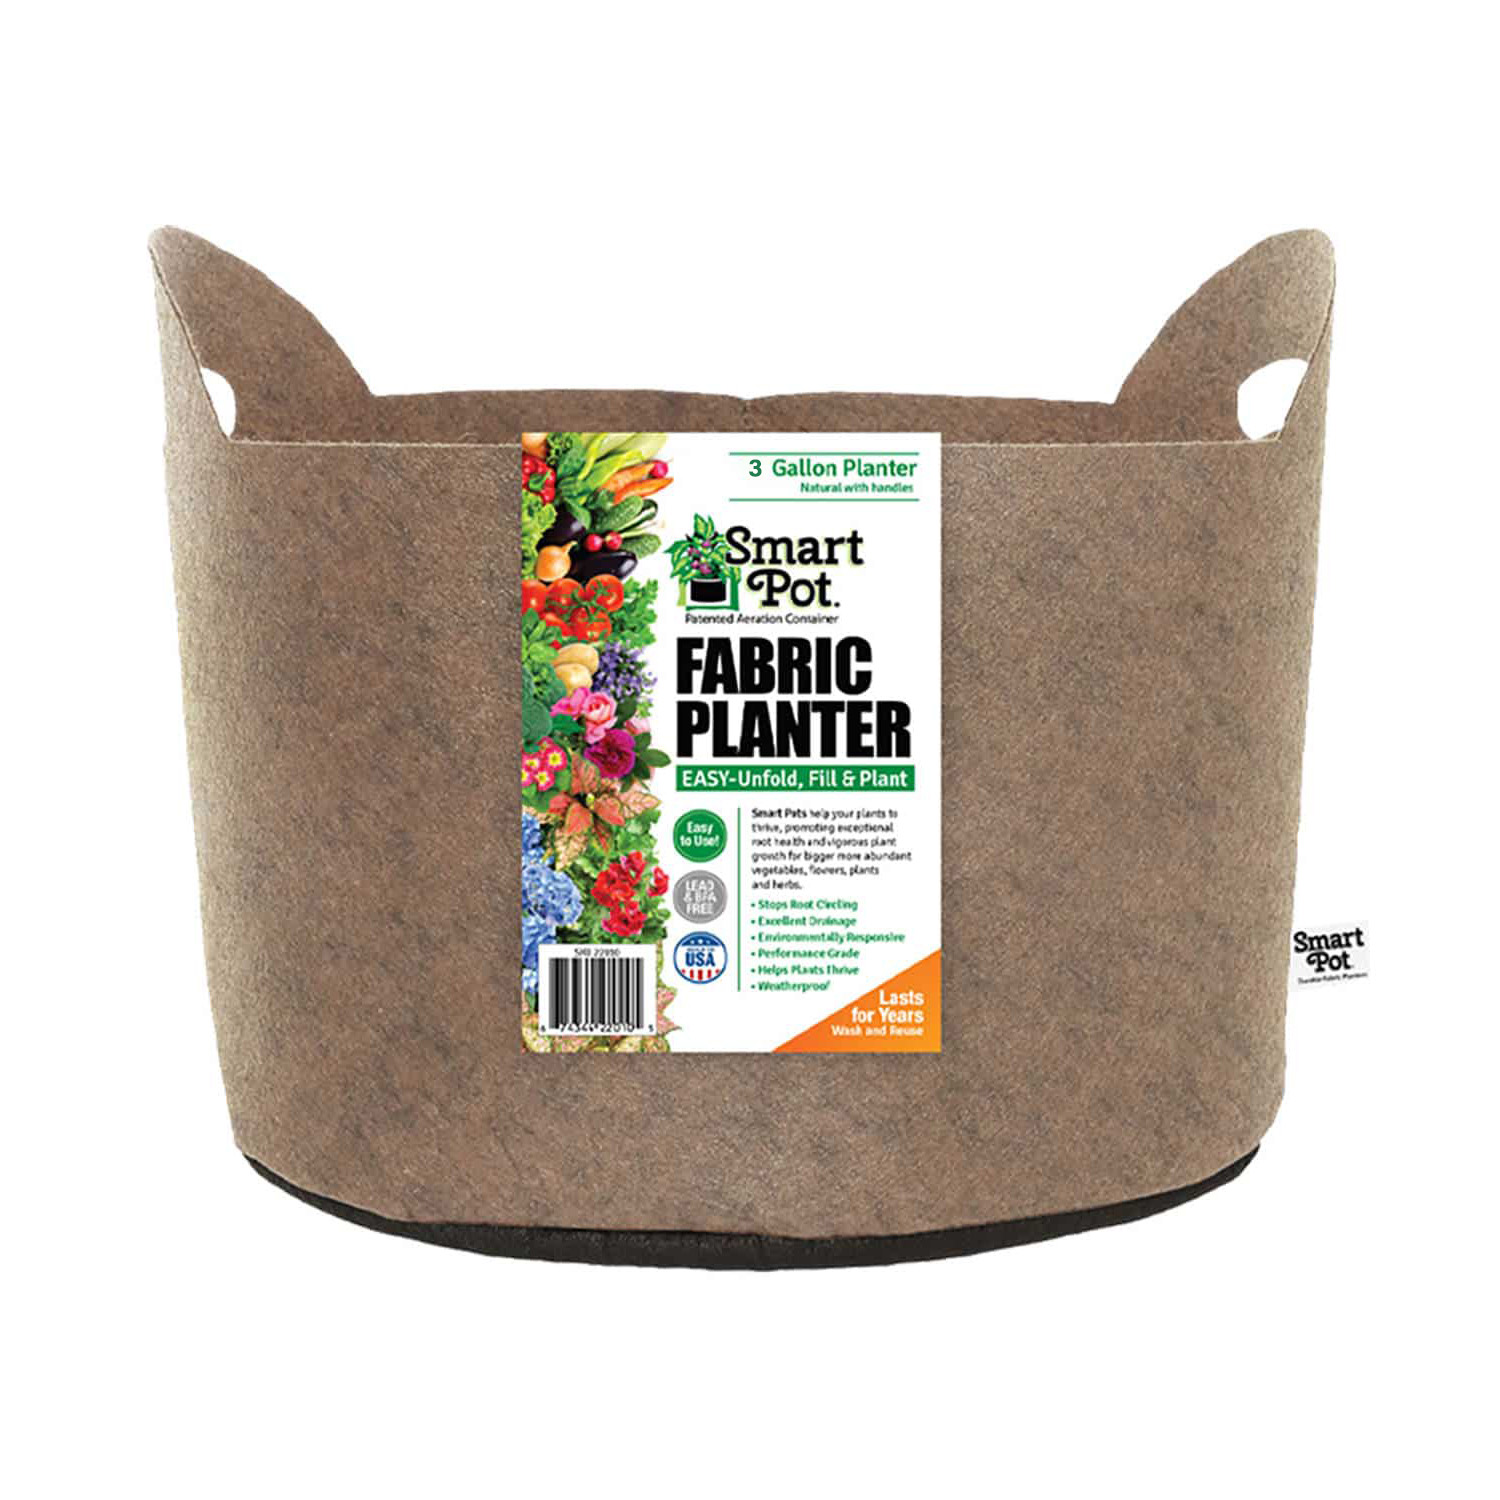 6 Pack 18 Gallons Grow Bags Healthy Smart Gardening Pots